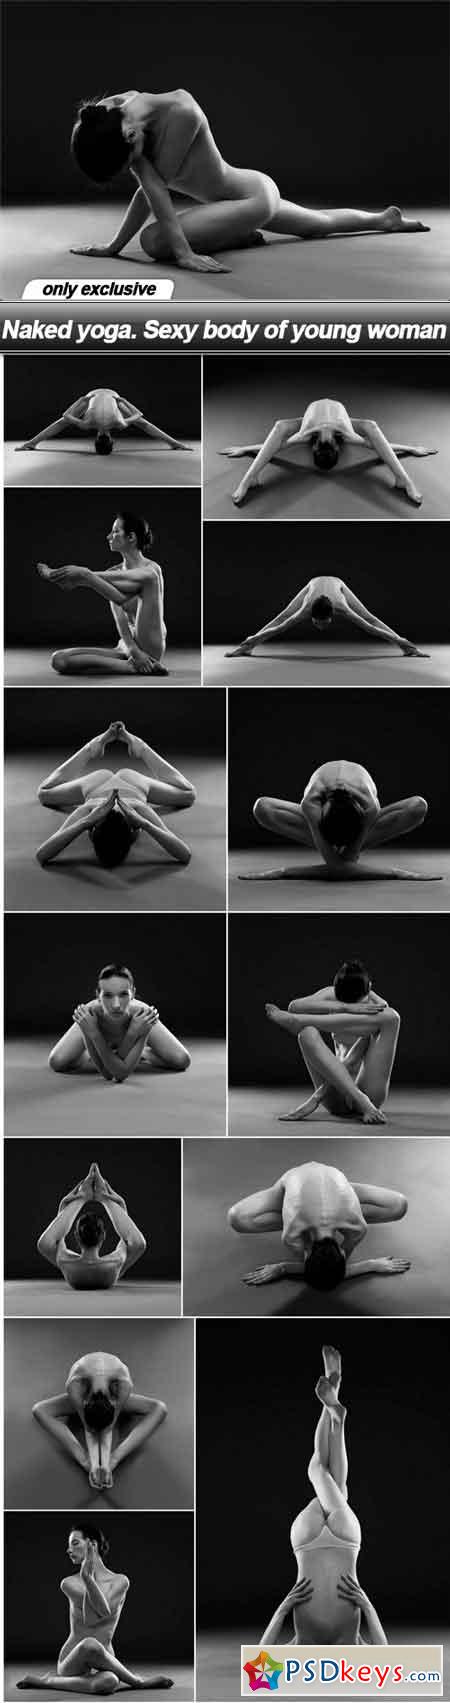 Naked yoga. Sexy body of young woman - 14 UHQ JPEG